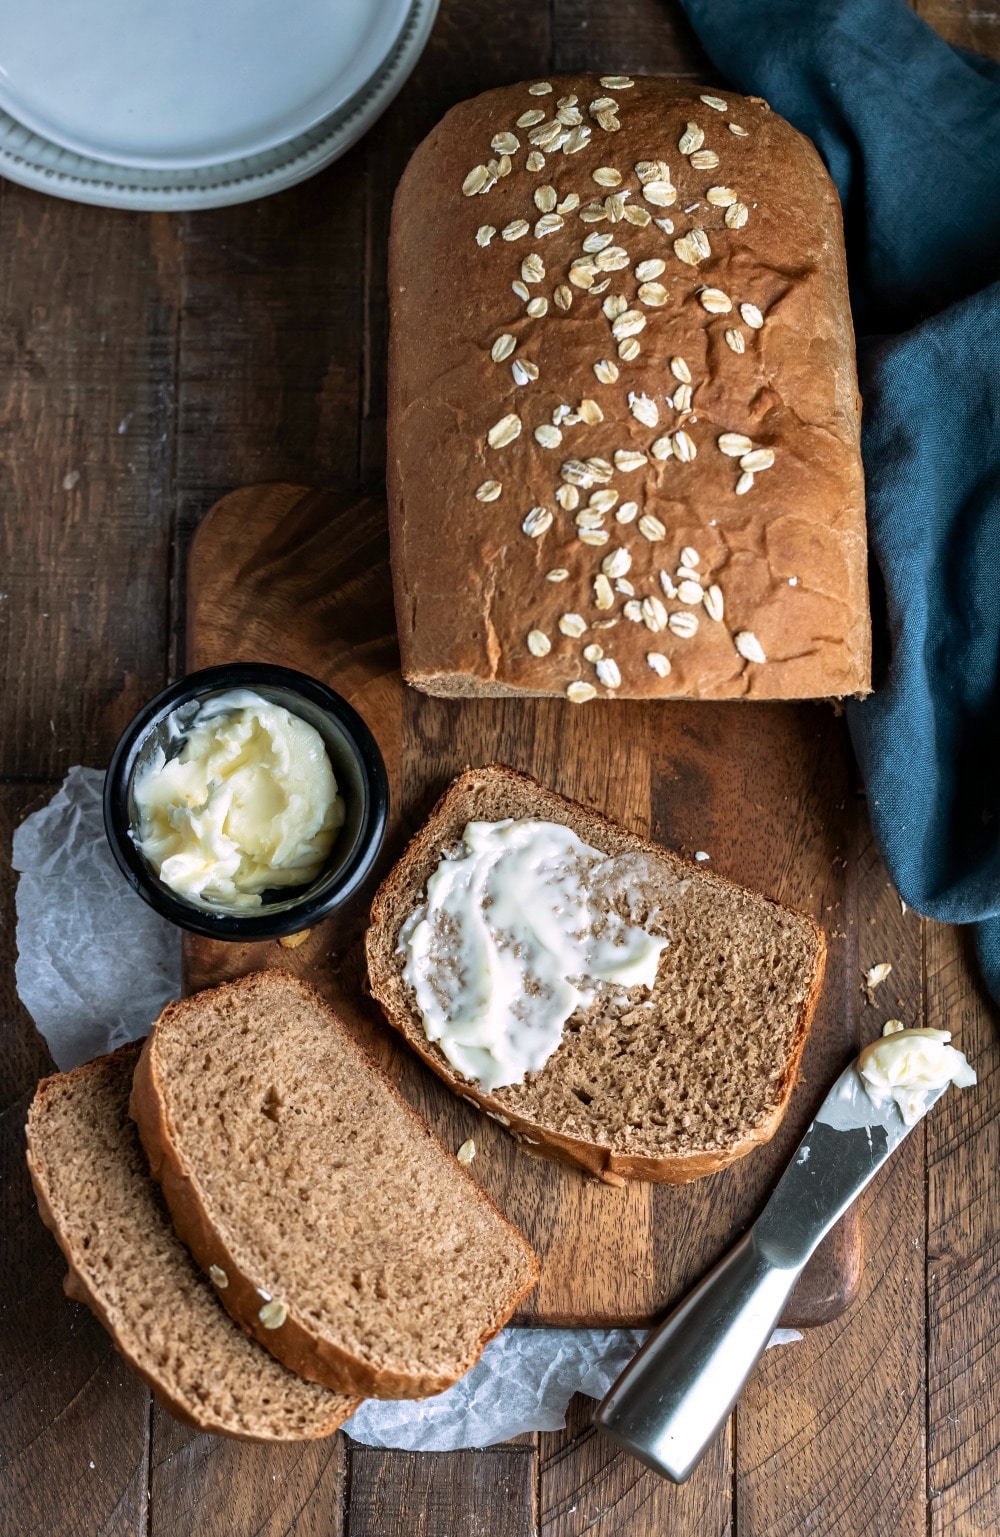 Chart House Squaw Bread Recipe